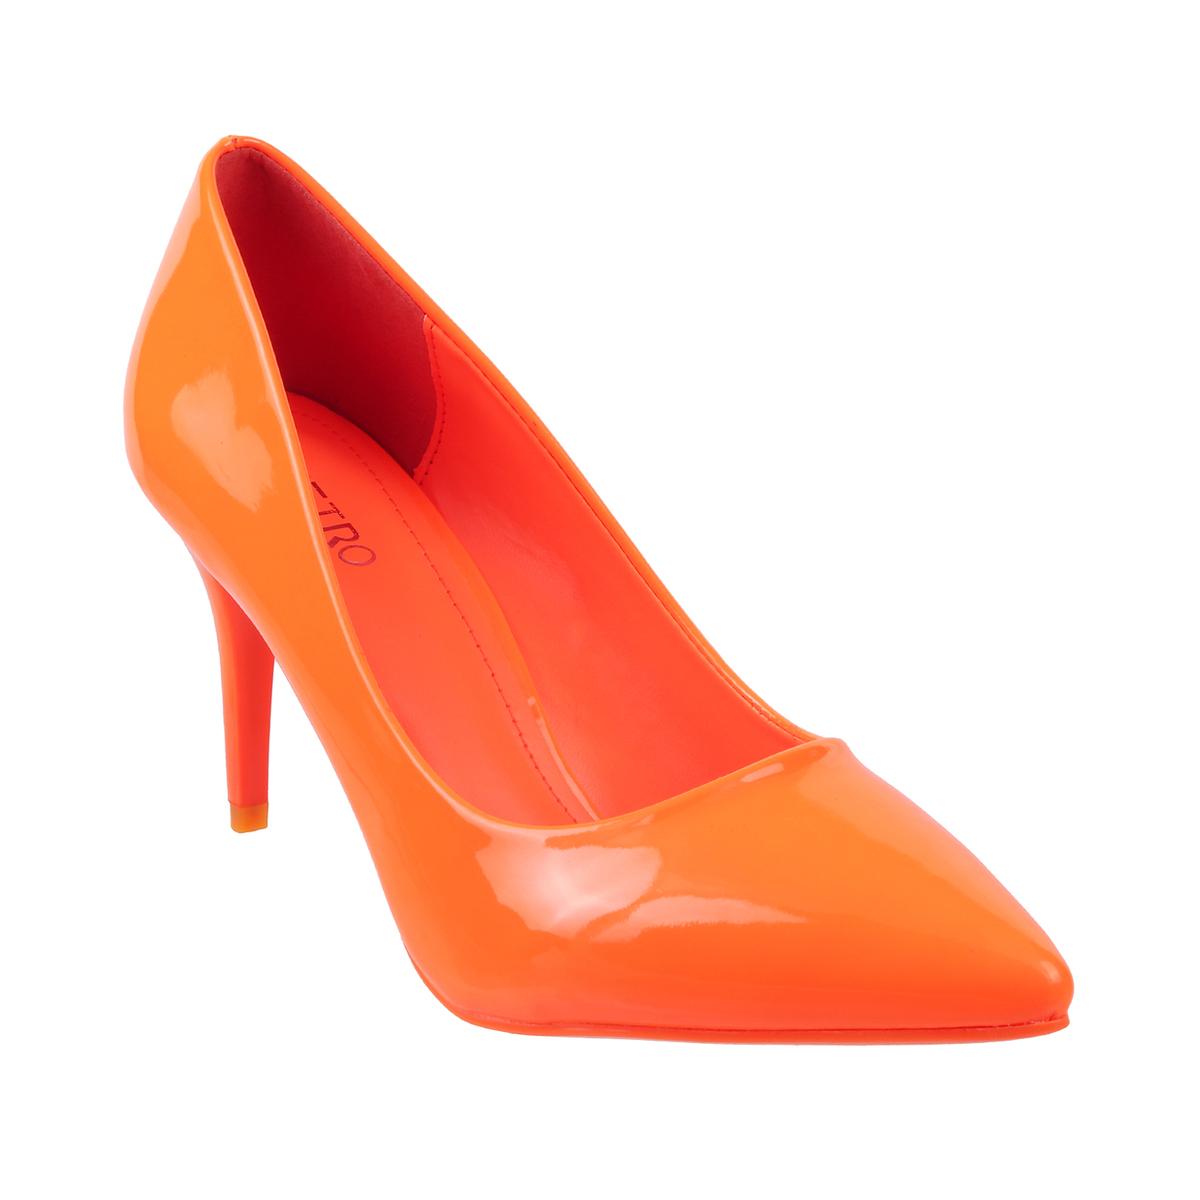 Buy Orange Party Pumps Online | SKU:31-9844-25-34 - Shoes